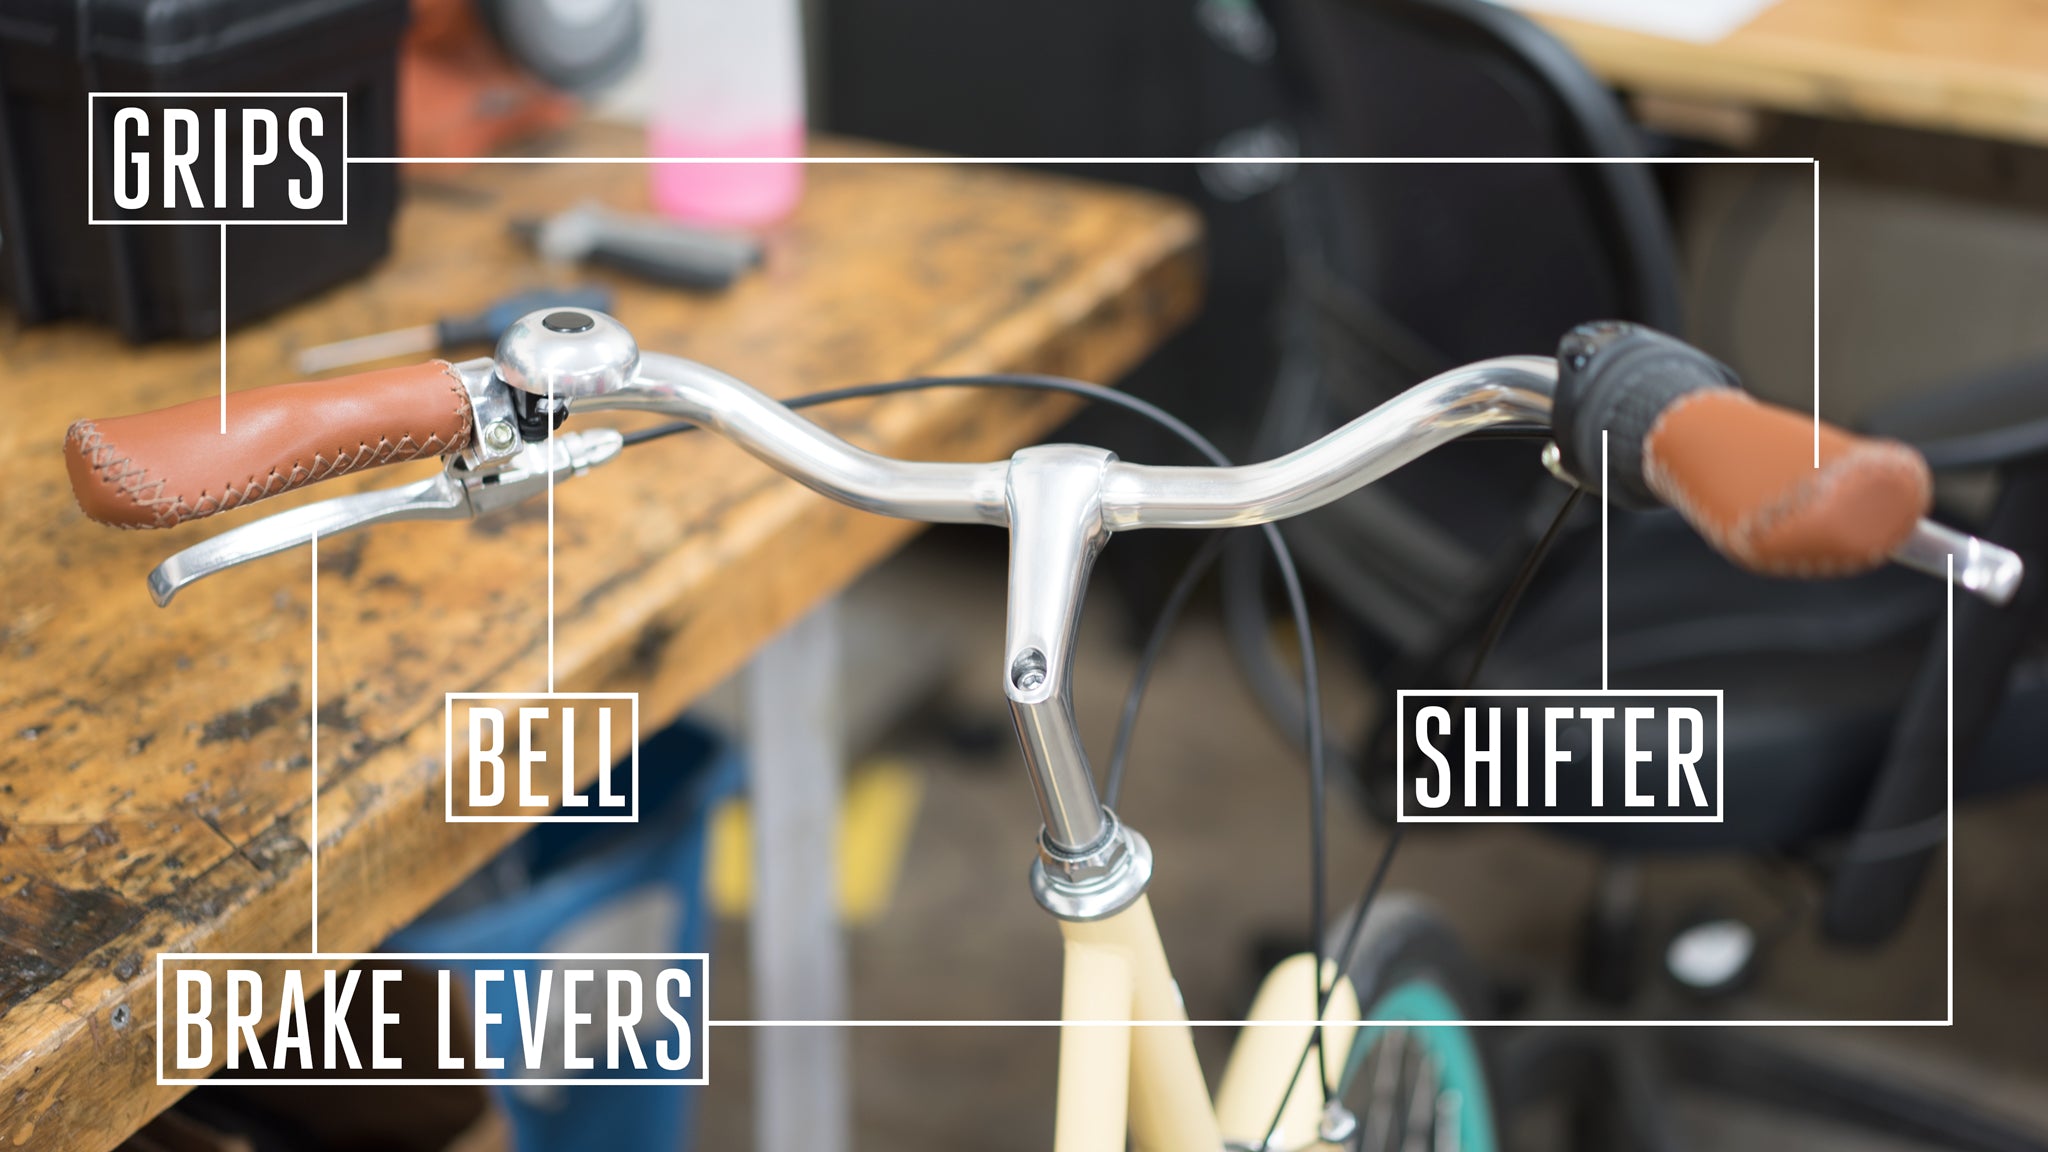 replacing handlebars on bike